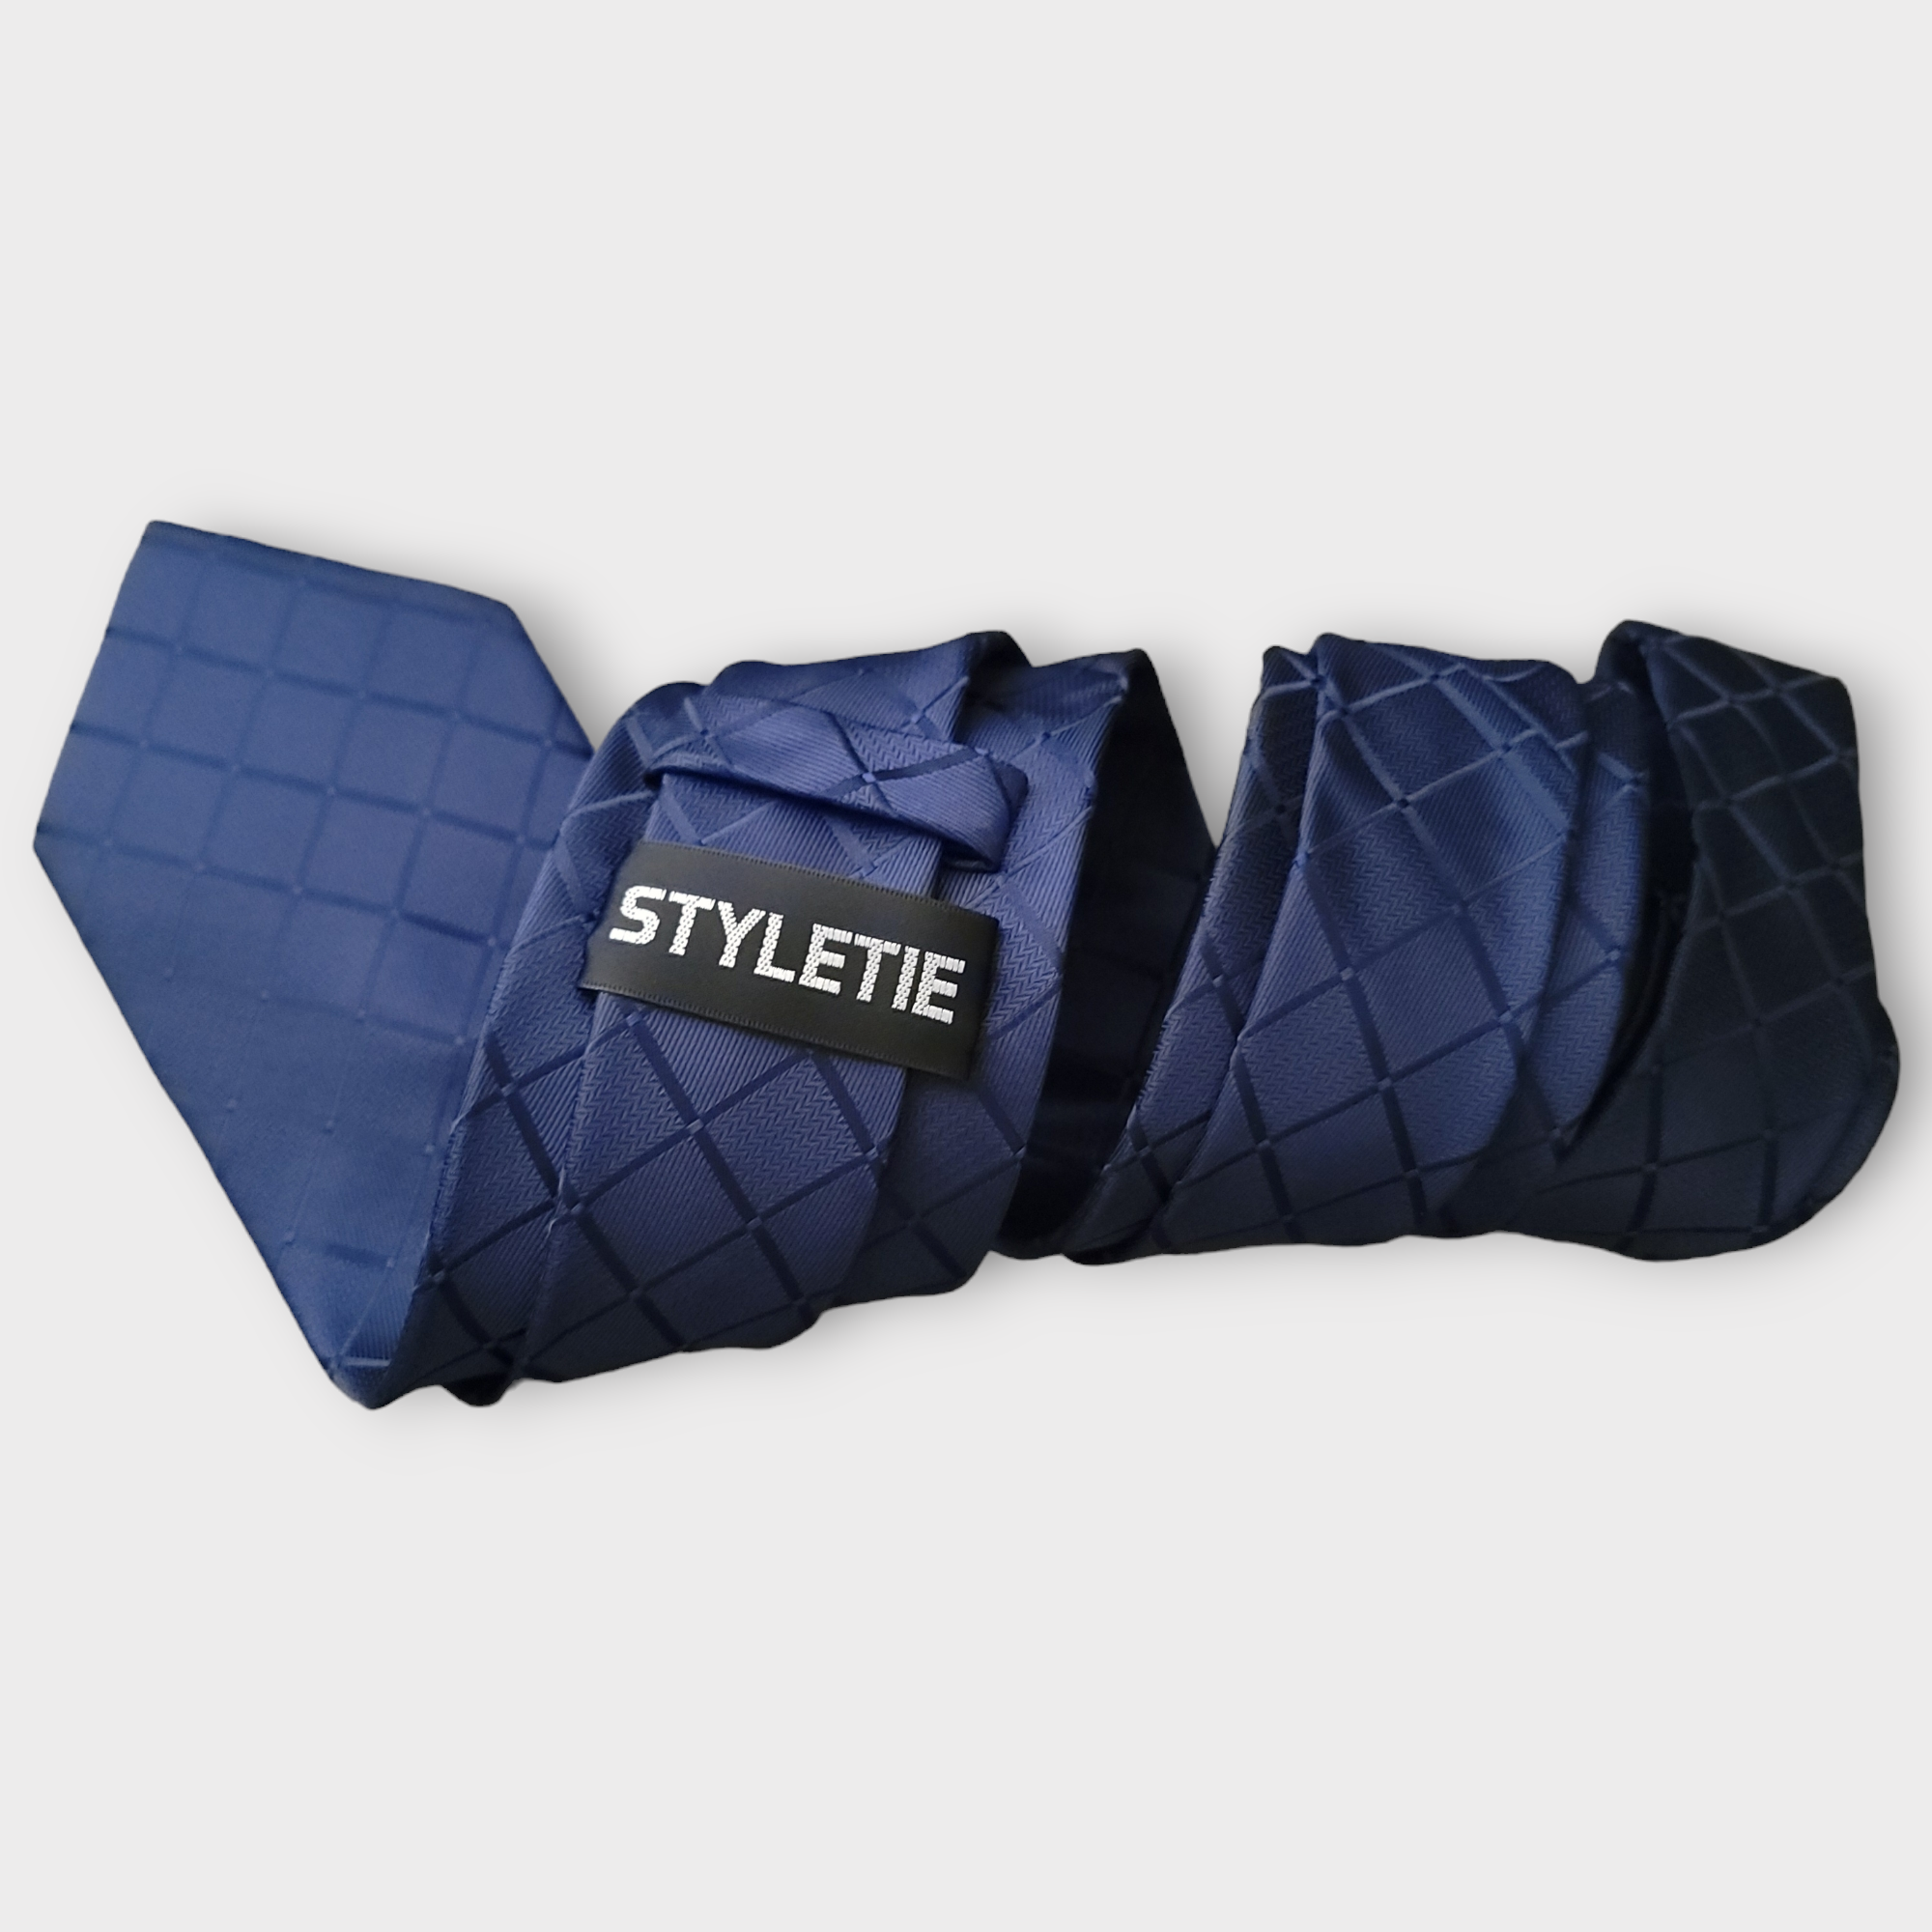 Extra Long Navy Blue Plaid Tie Pocket Square Cufflink Set